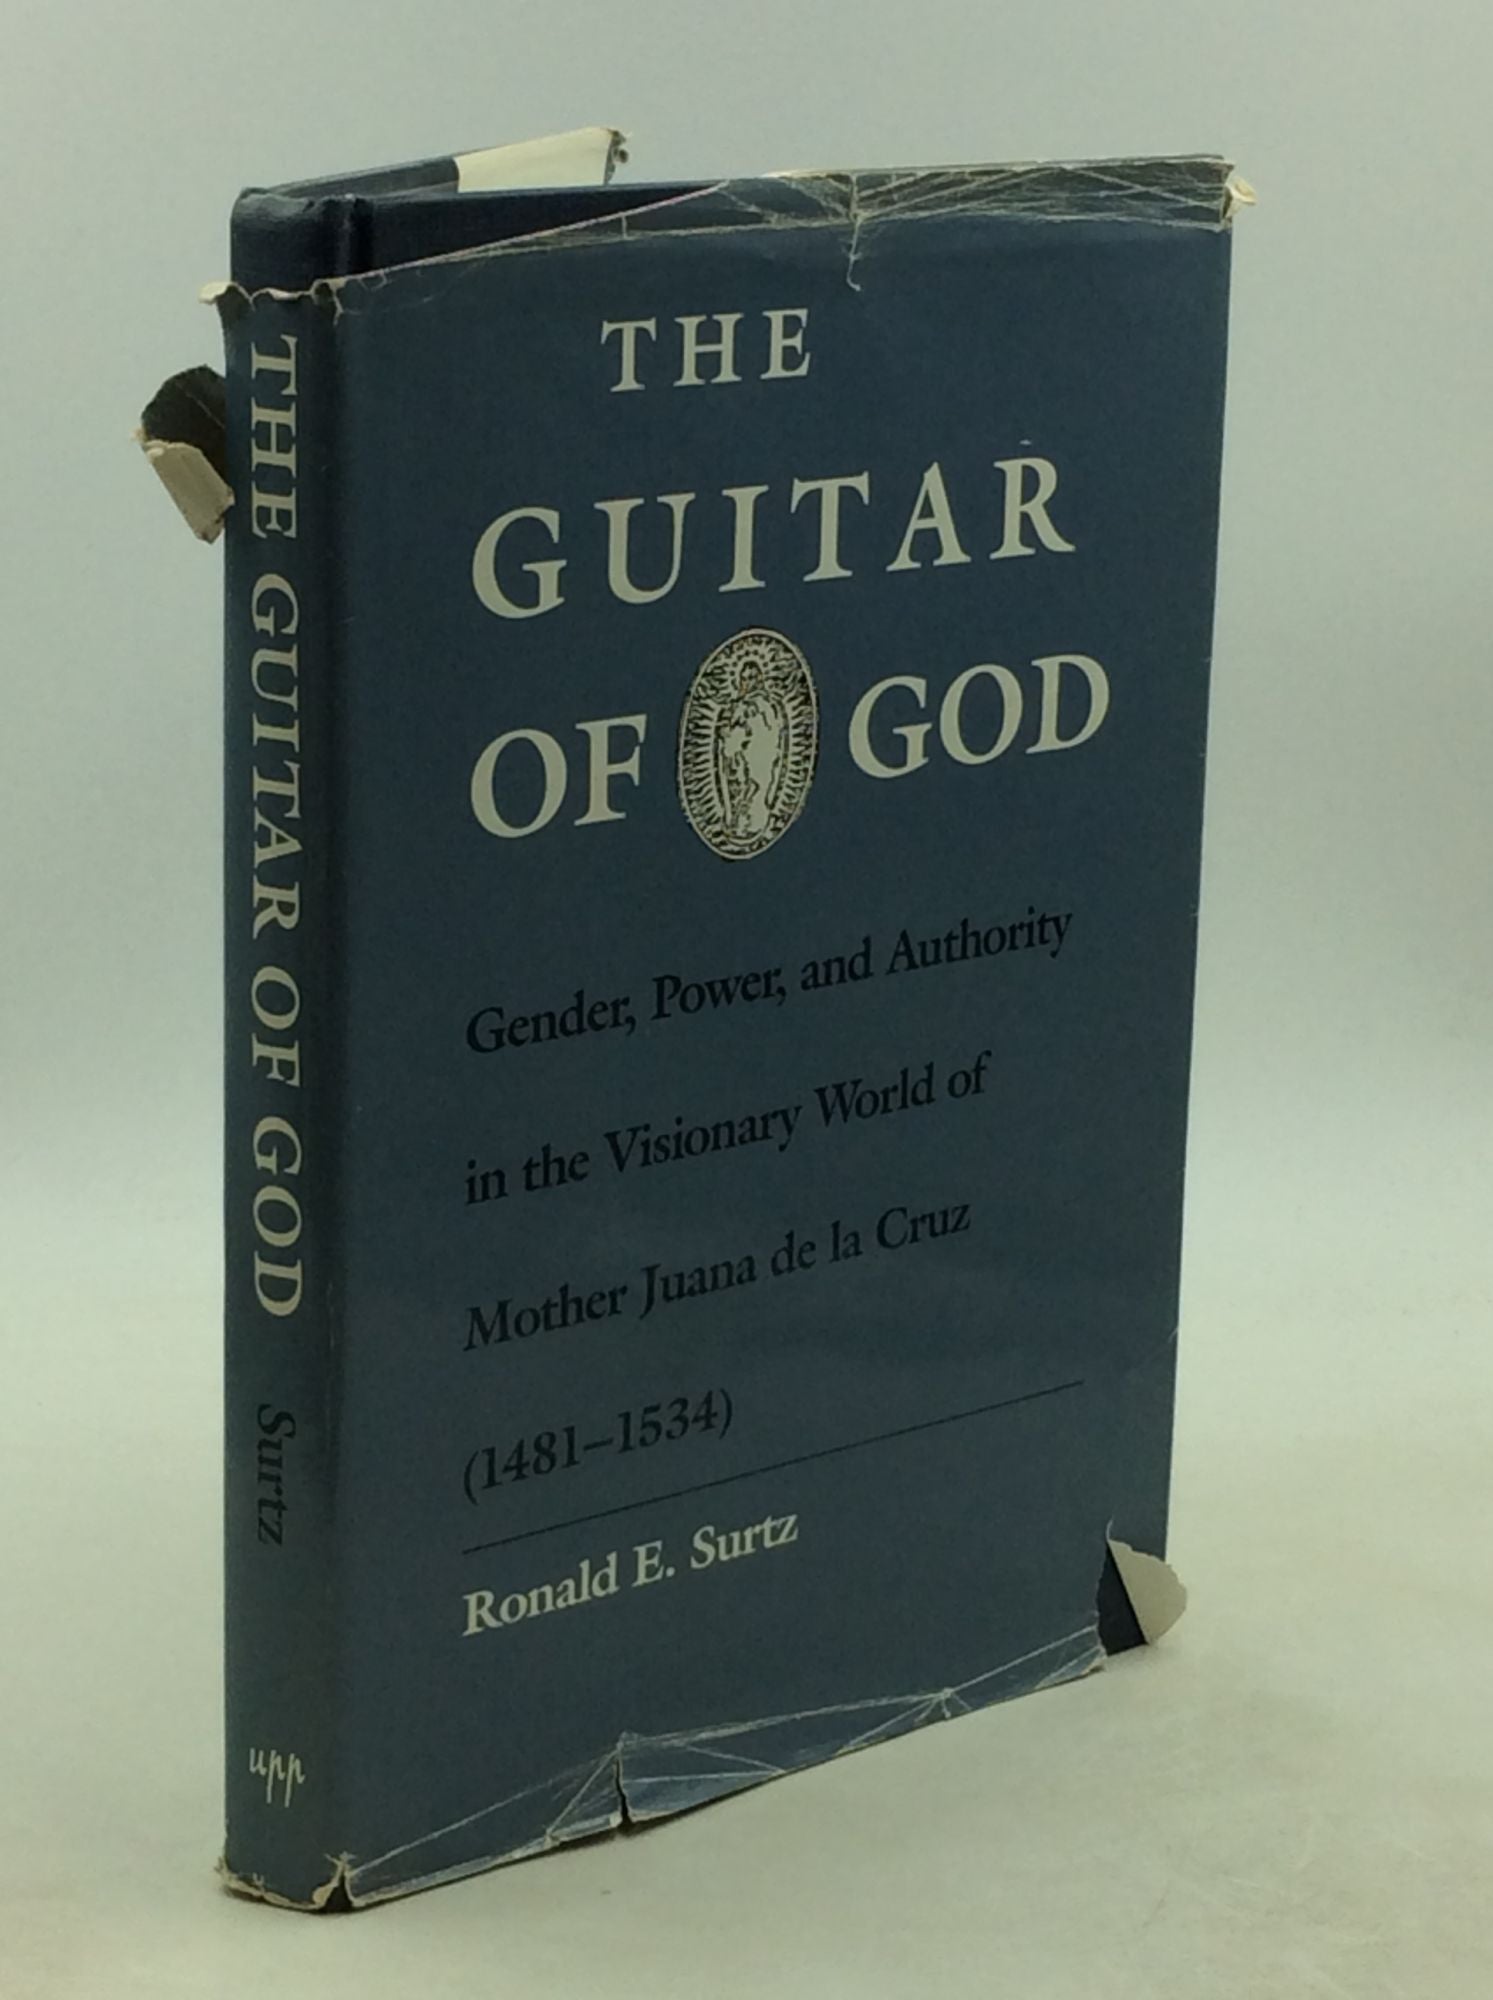 Ronald E. Surtz - The Guitar of God: Gender, Power, and Authority in the Visionary World of Mother Juana de la Cruz (1481-1534)